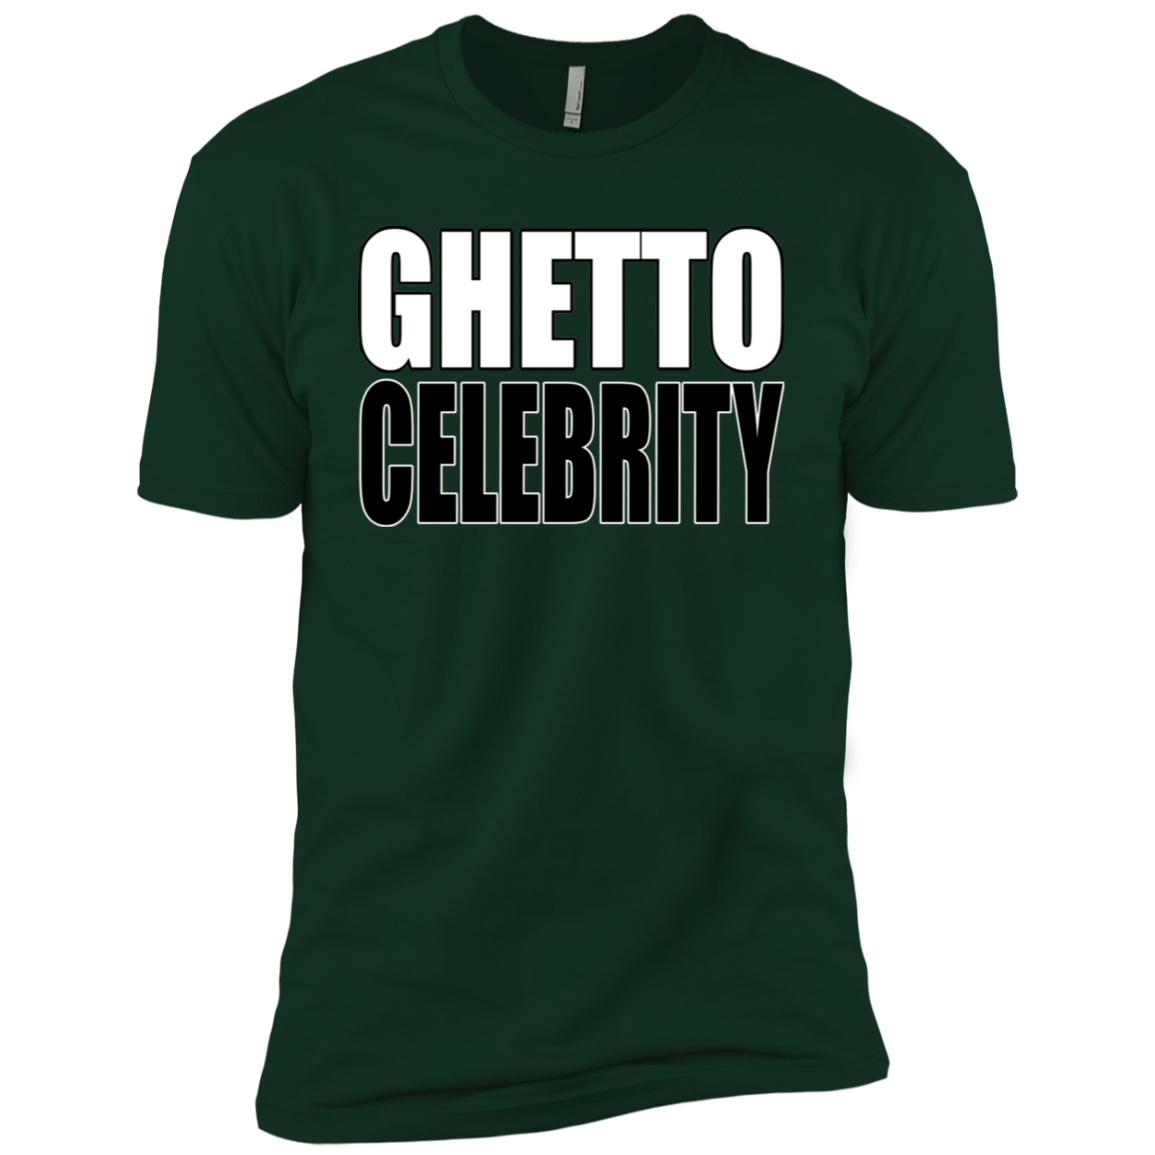 Ghetto Celebrity Premium Short Sleeve T-Shirt